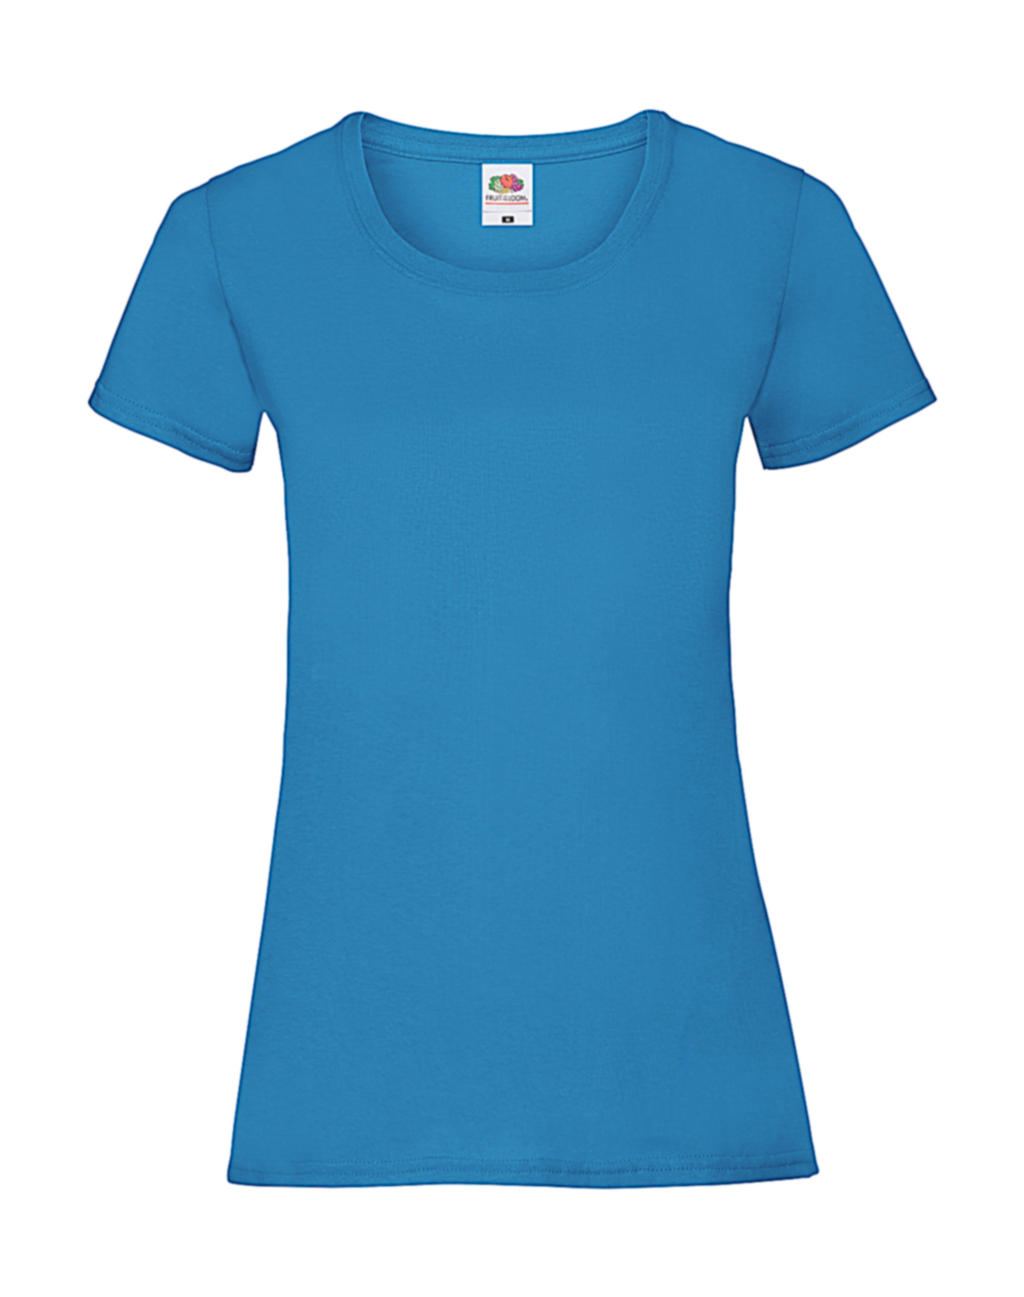 Camiseta pico mujer - fruit of the loom valueweight - 136. 01